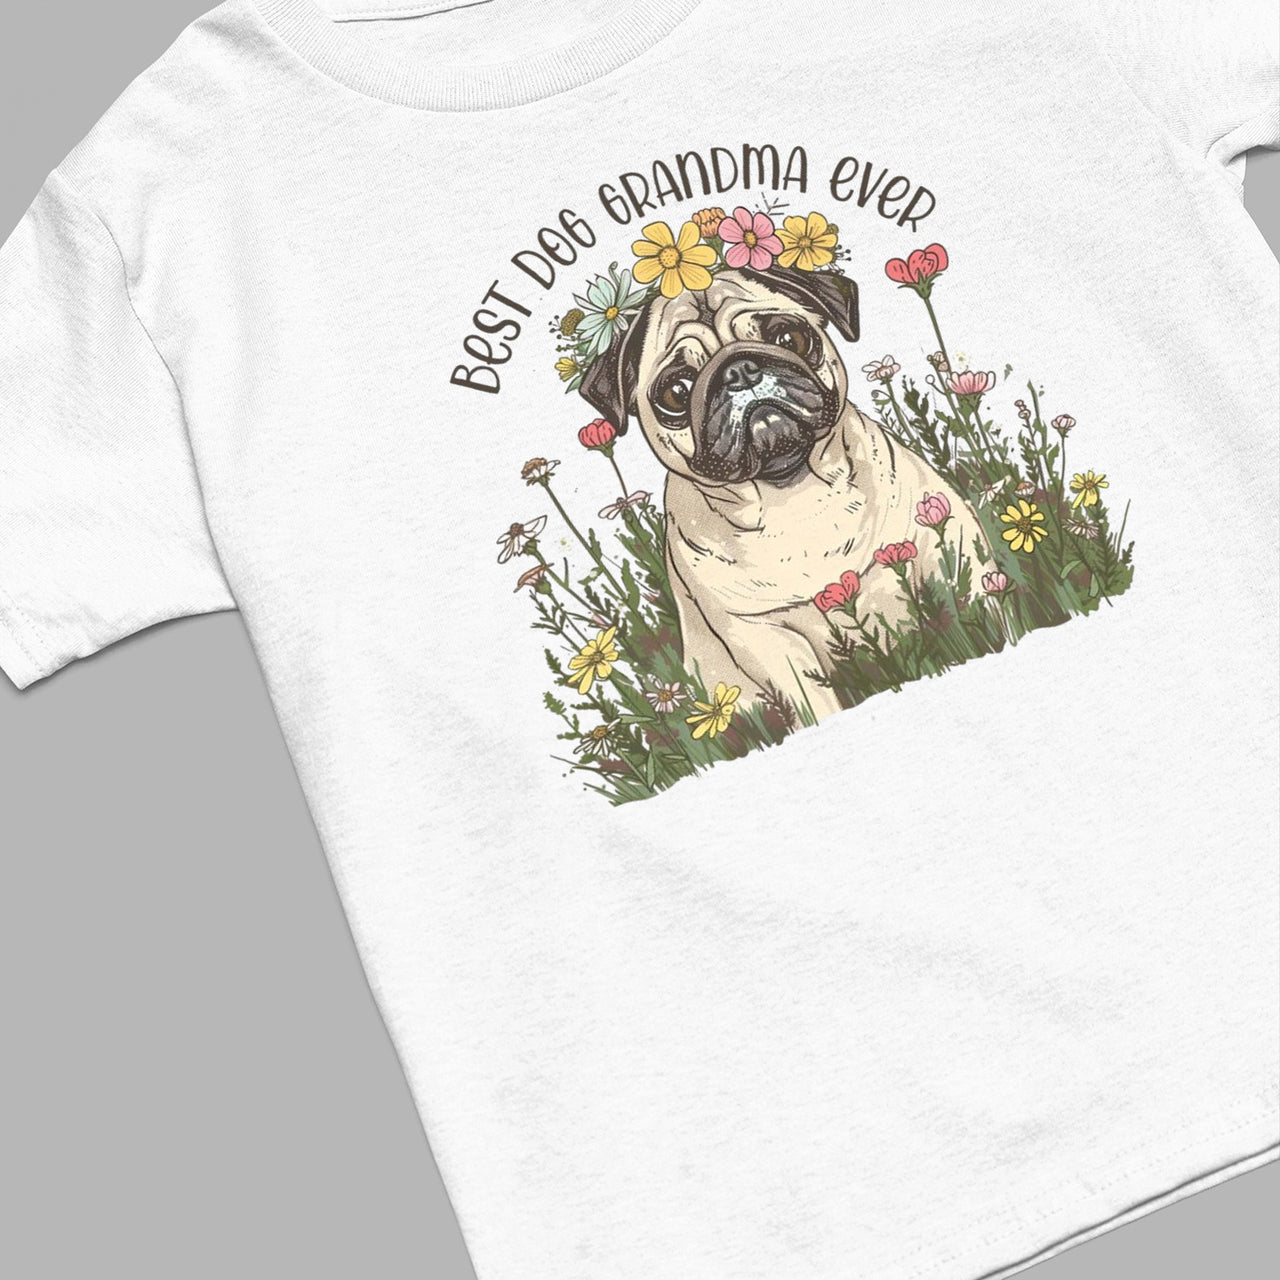 Pug Dog T-shirt, Pet Lover Shirt, Dog Lover Shirt, Best Dog Grandma Ever T-Shirt, Dog Owner Shirt, Gift For Dog Grandma, Funny Dog Shirts, Women Dog T-Shirt, Mother's Day Gift, Dog Lover Wife Gifts, Dog Shirt